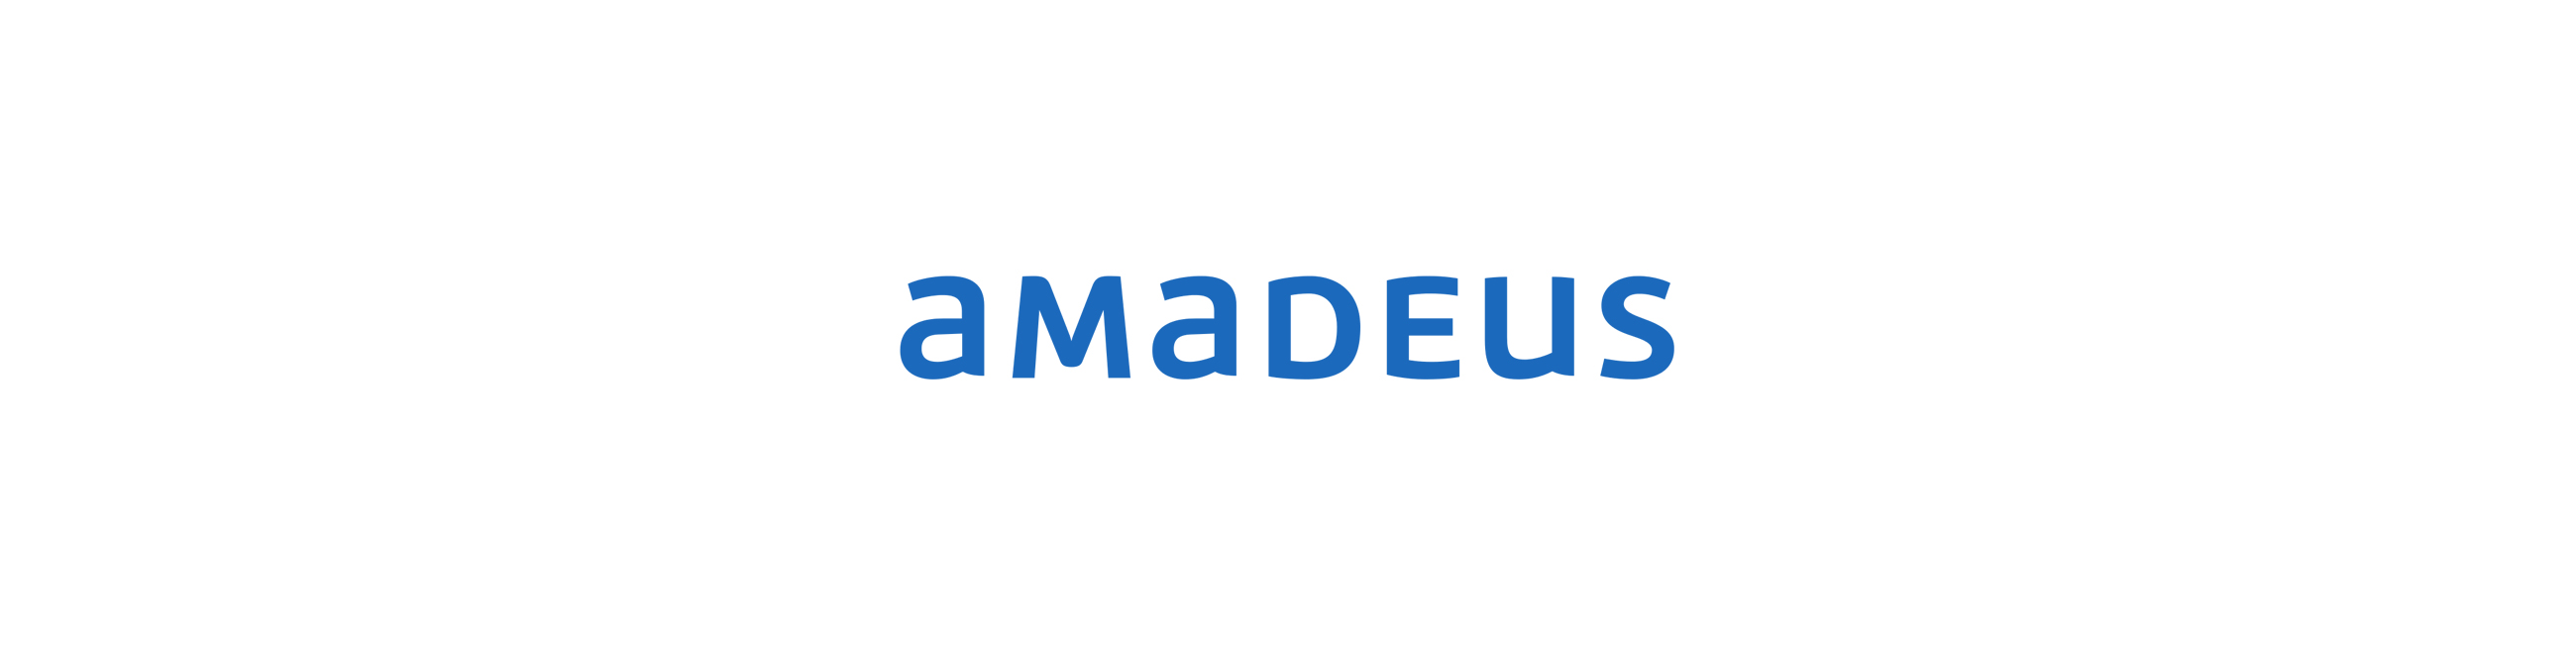 Amadeus Travel Tech Talk